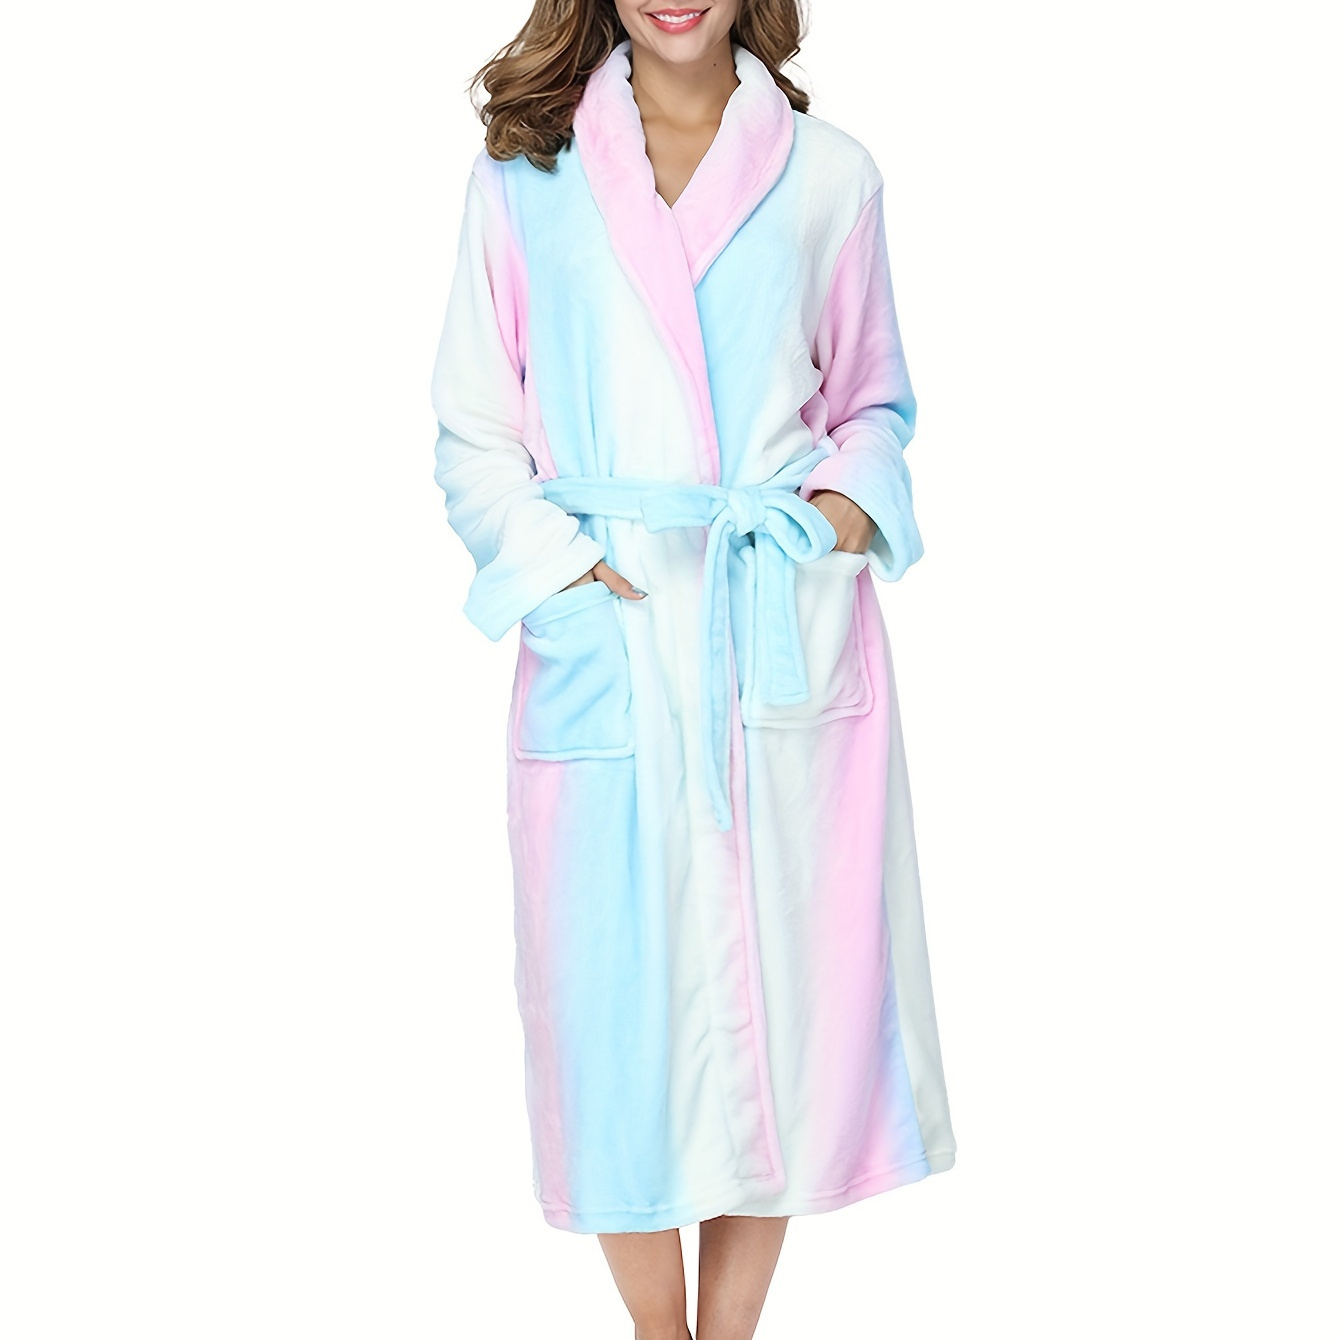 

Women's Rainbow Print Flannel Fleece Robe, Cozy Lounge Bathrobe With Shawl Collar, Long Sleeve, Belt Closure, Side Pockets, Soft Party Style, Warm Winter Nightwear